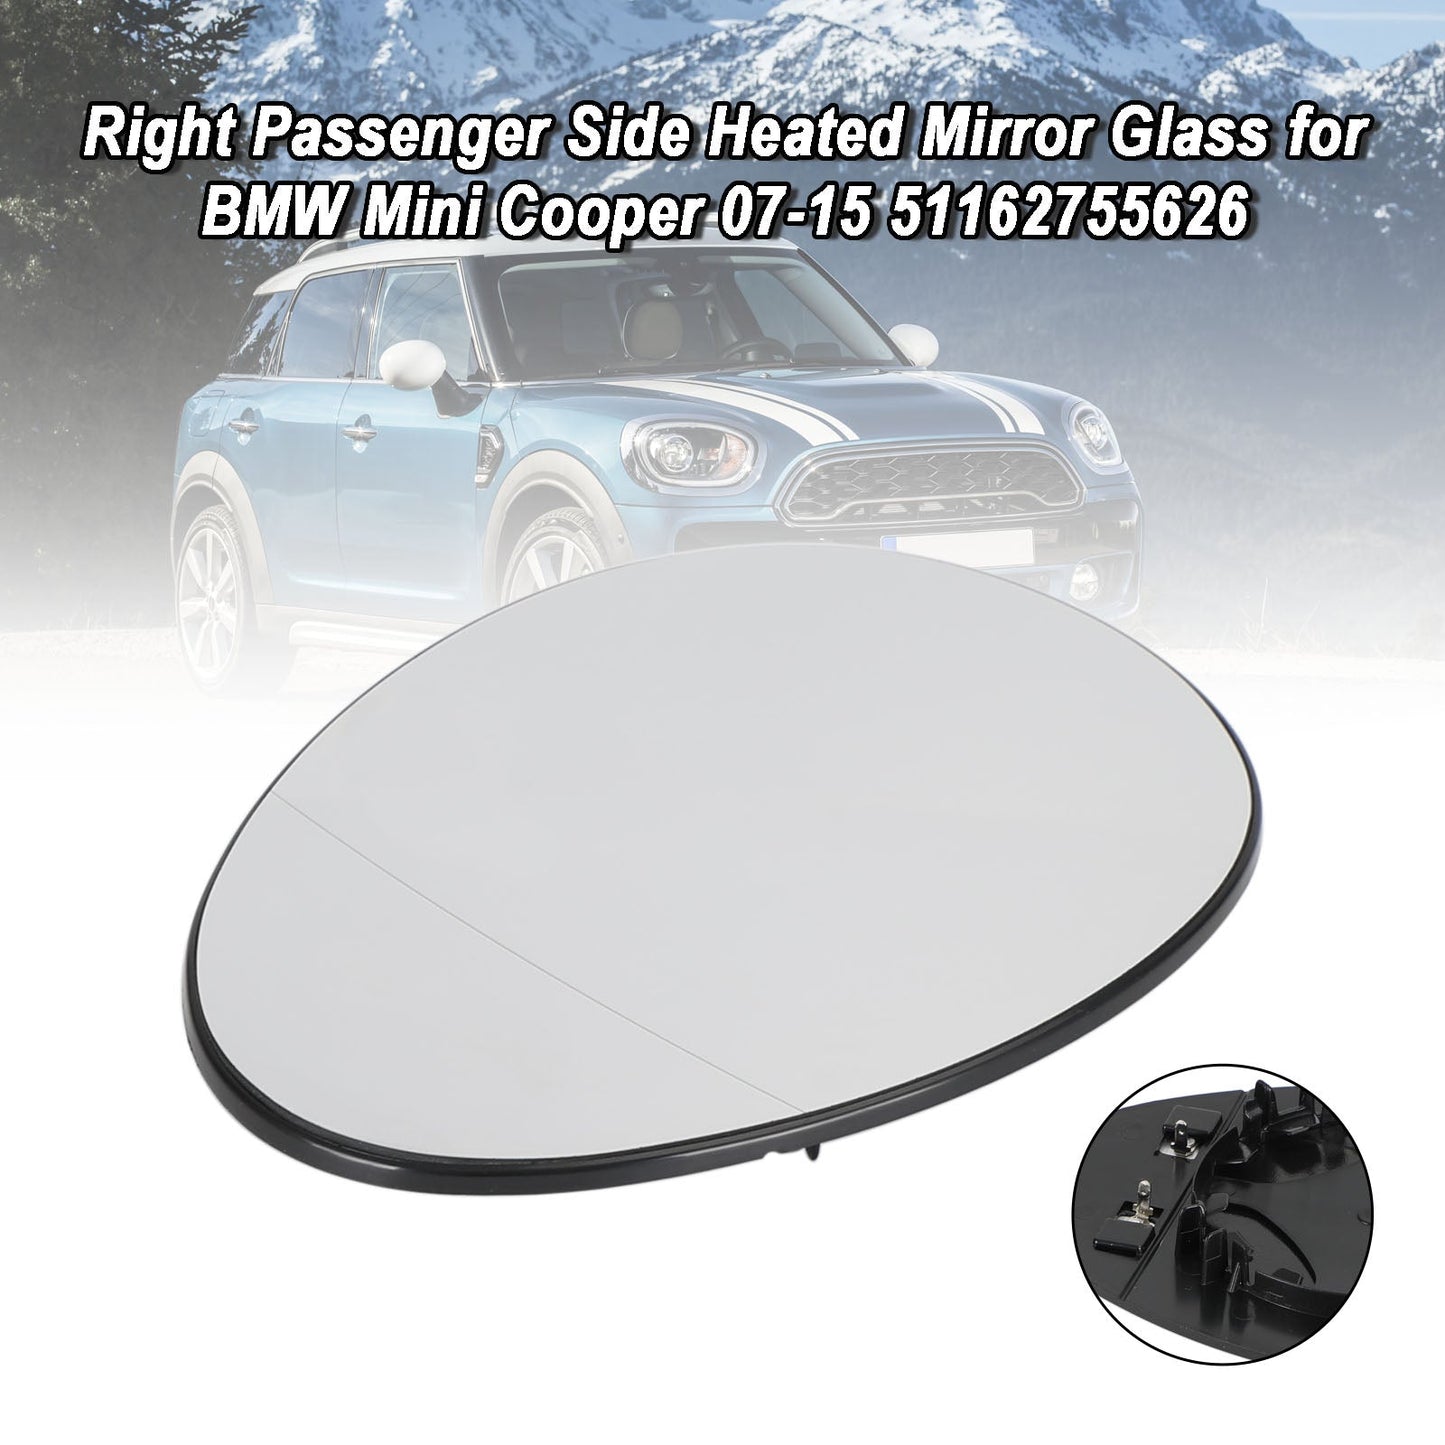 BMW Mini Cooper 2007-2015 51162755626 Right Passenger Side Heated Mirror Glass